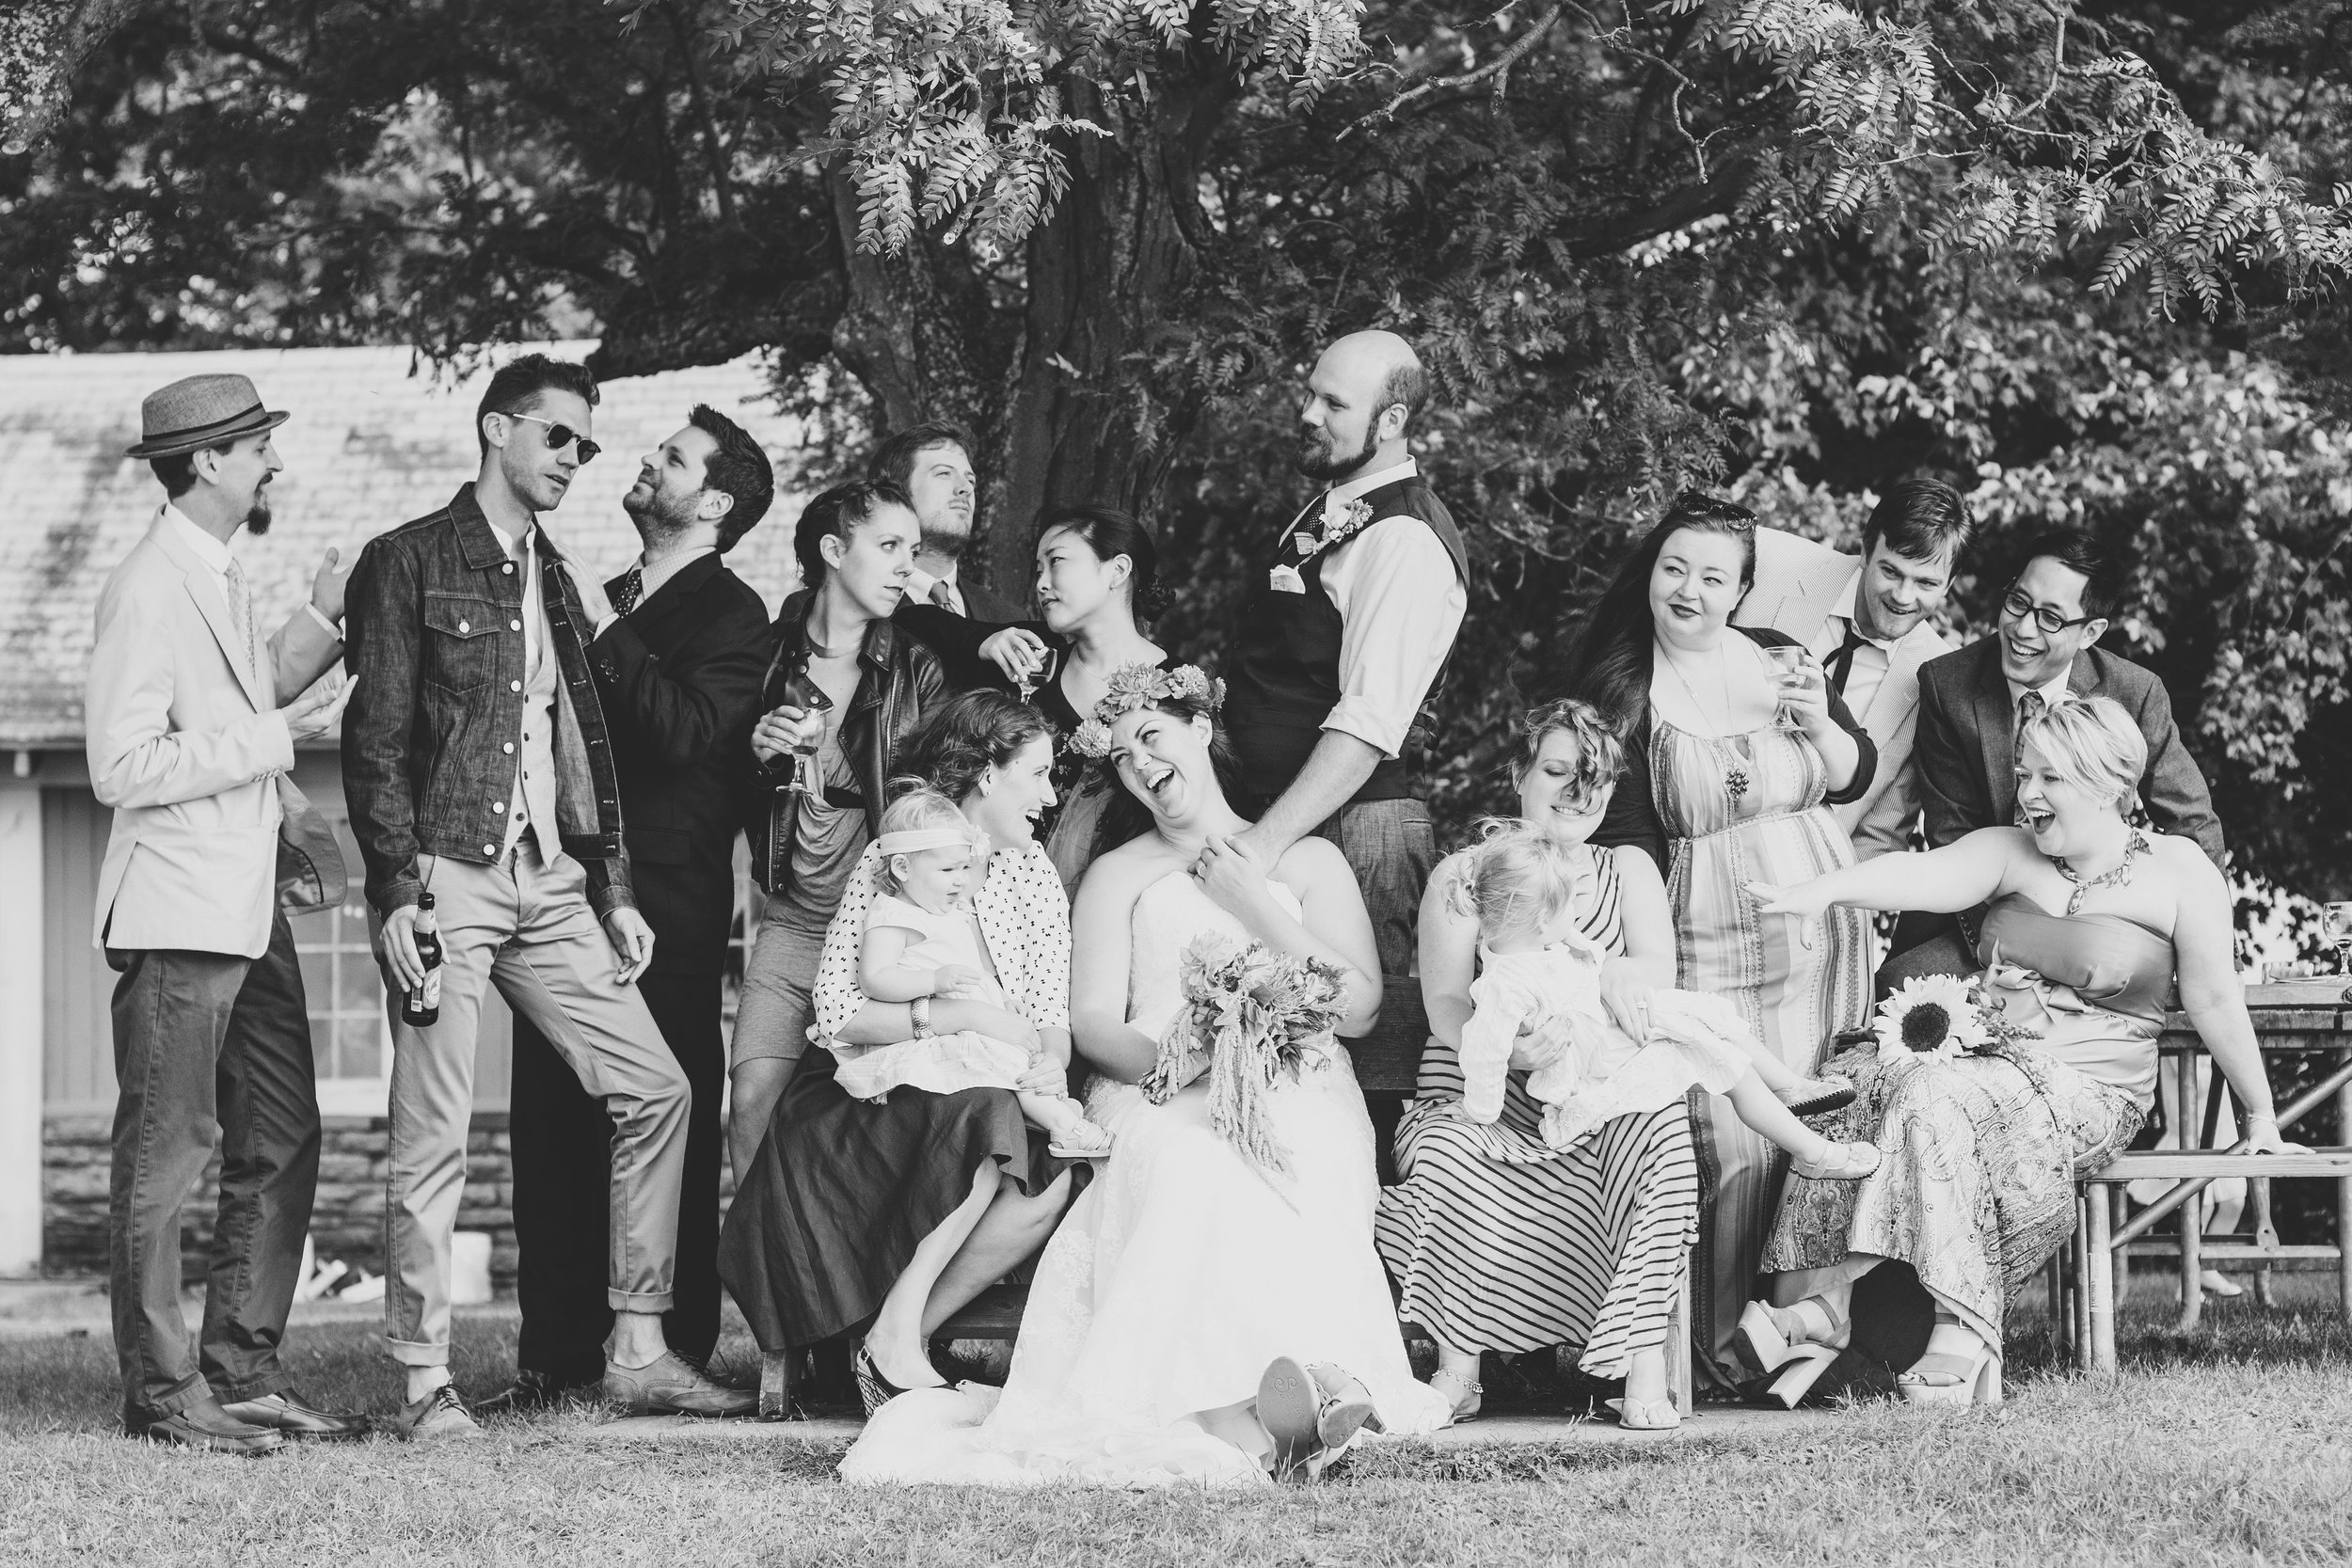 vanity-fair-style-black-white-large-group-wedding-photo-new-york-tr